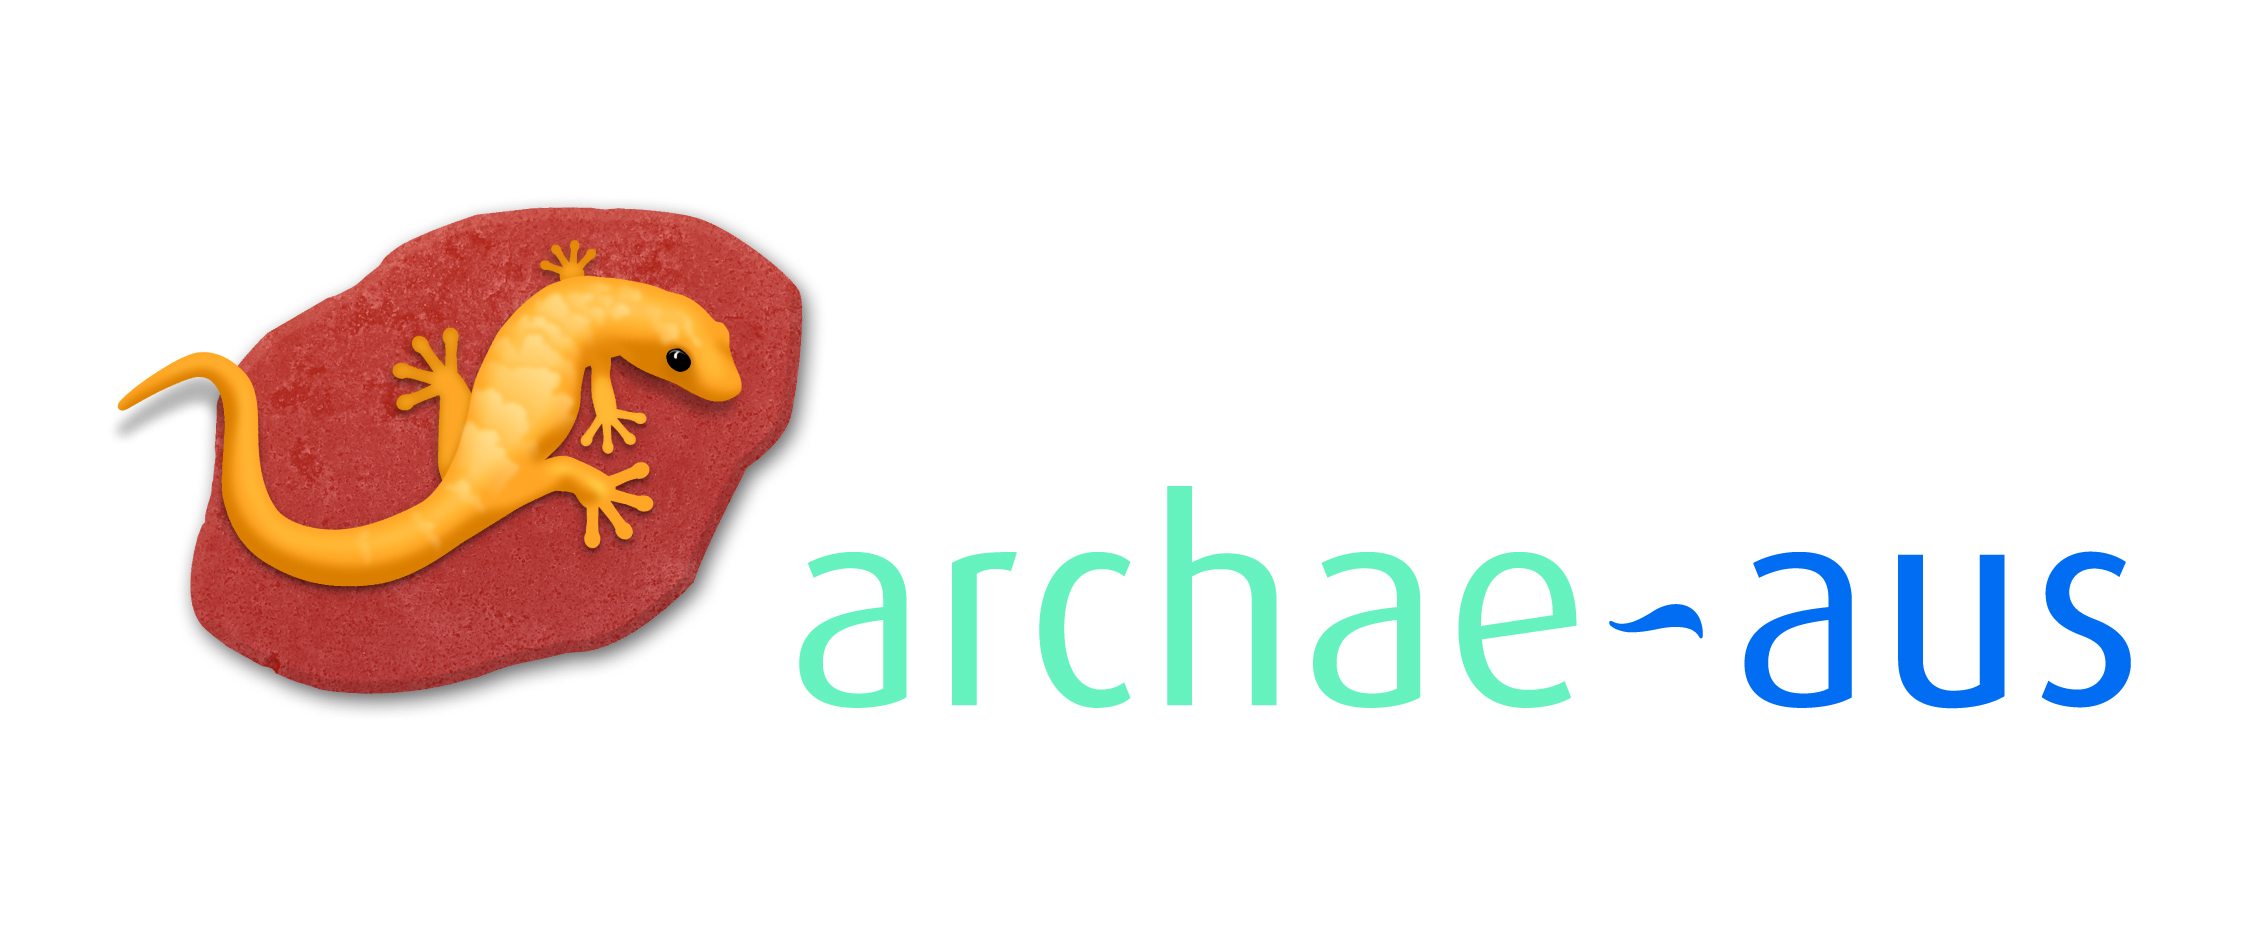 Archae-aus logo